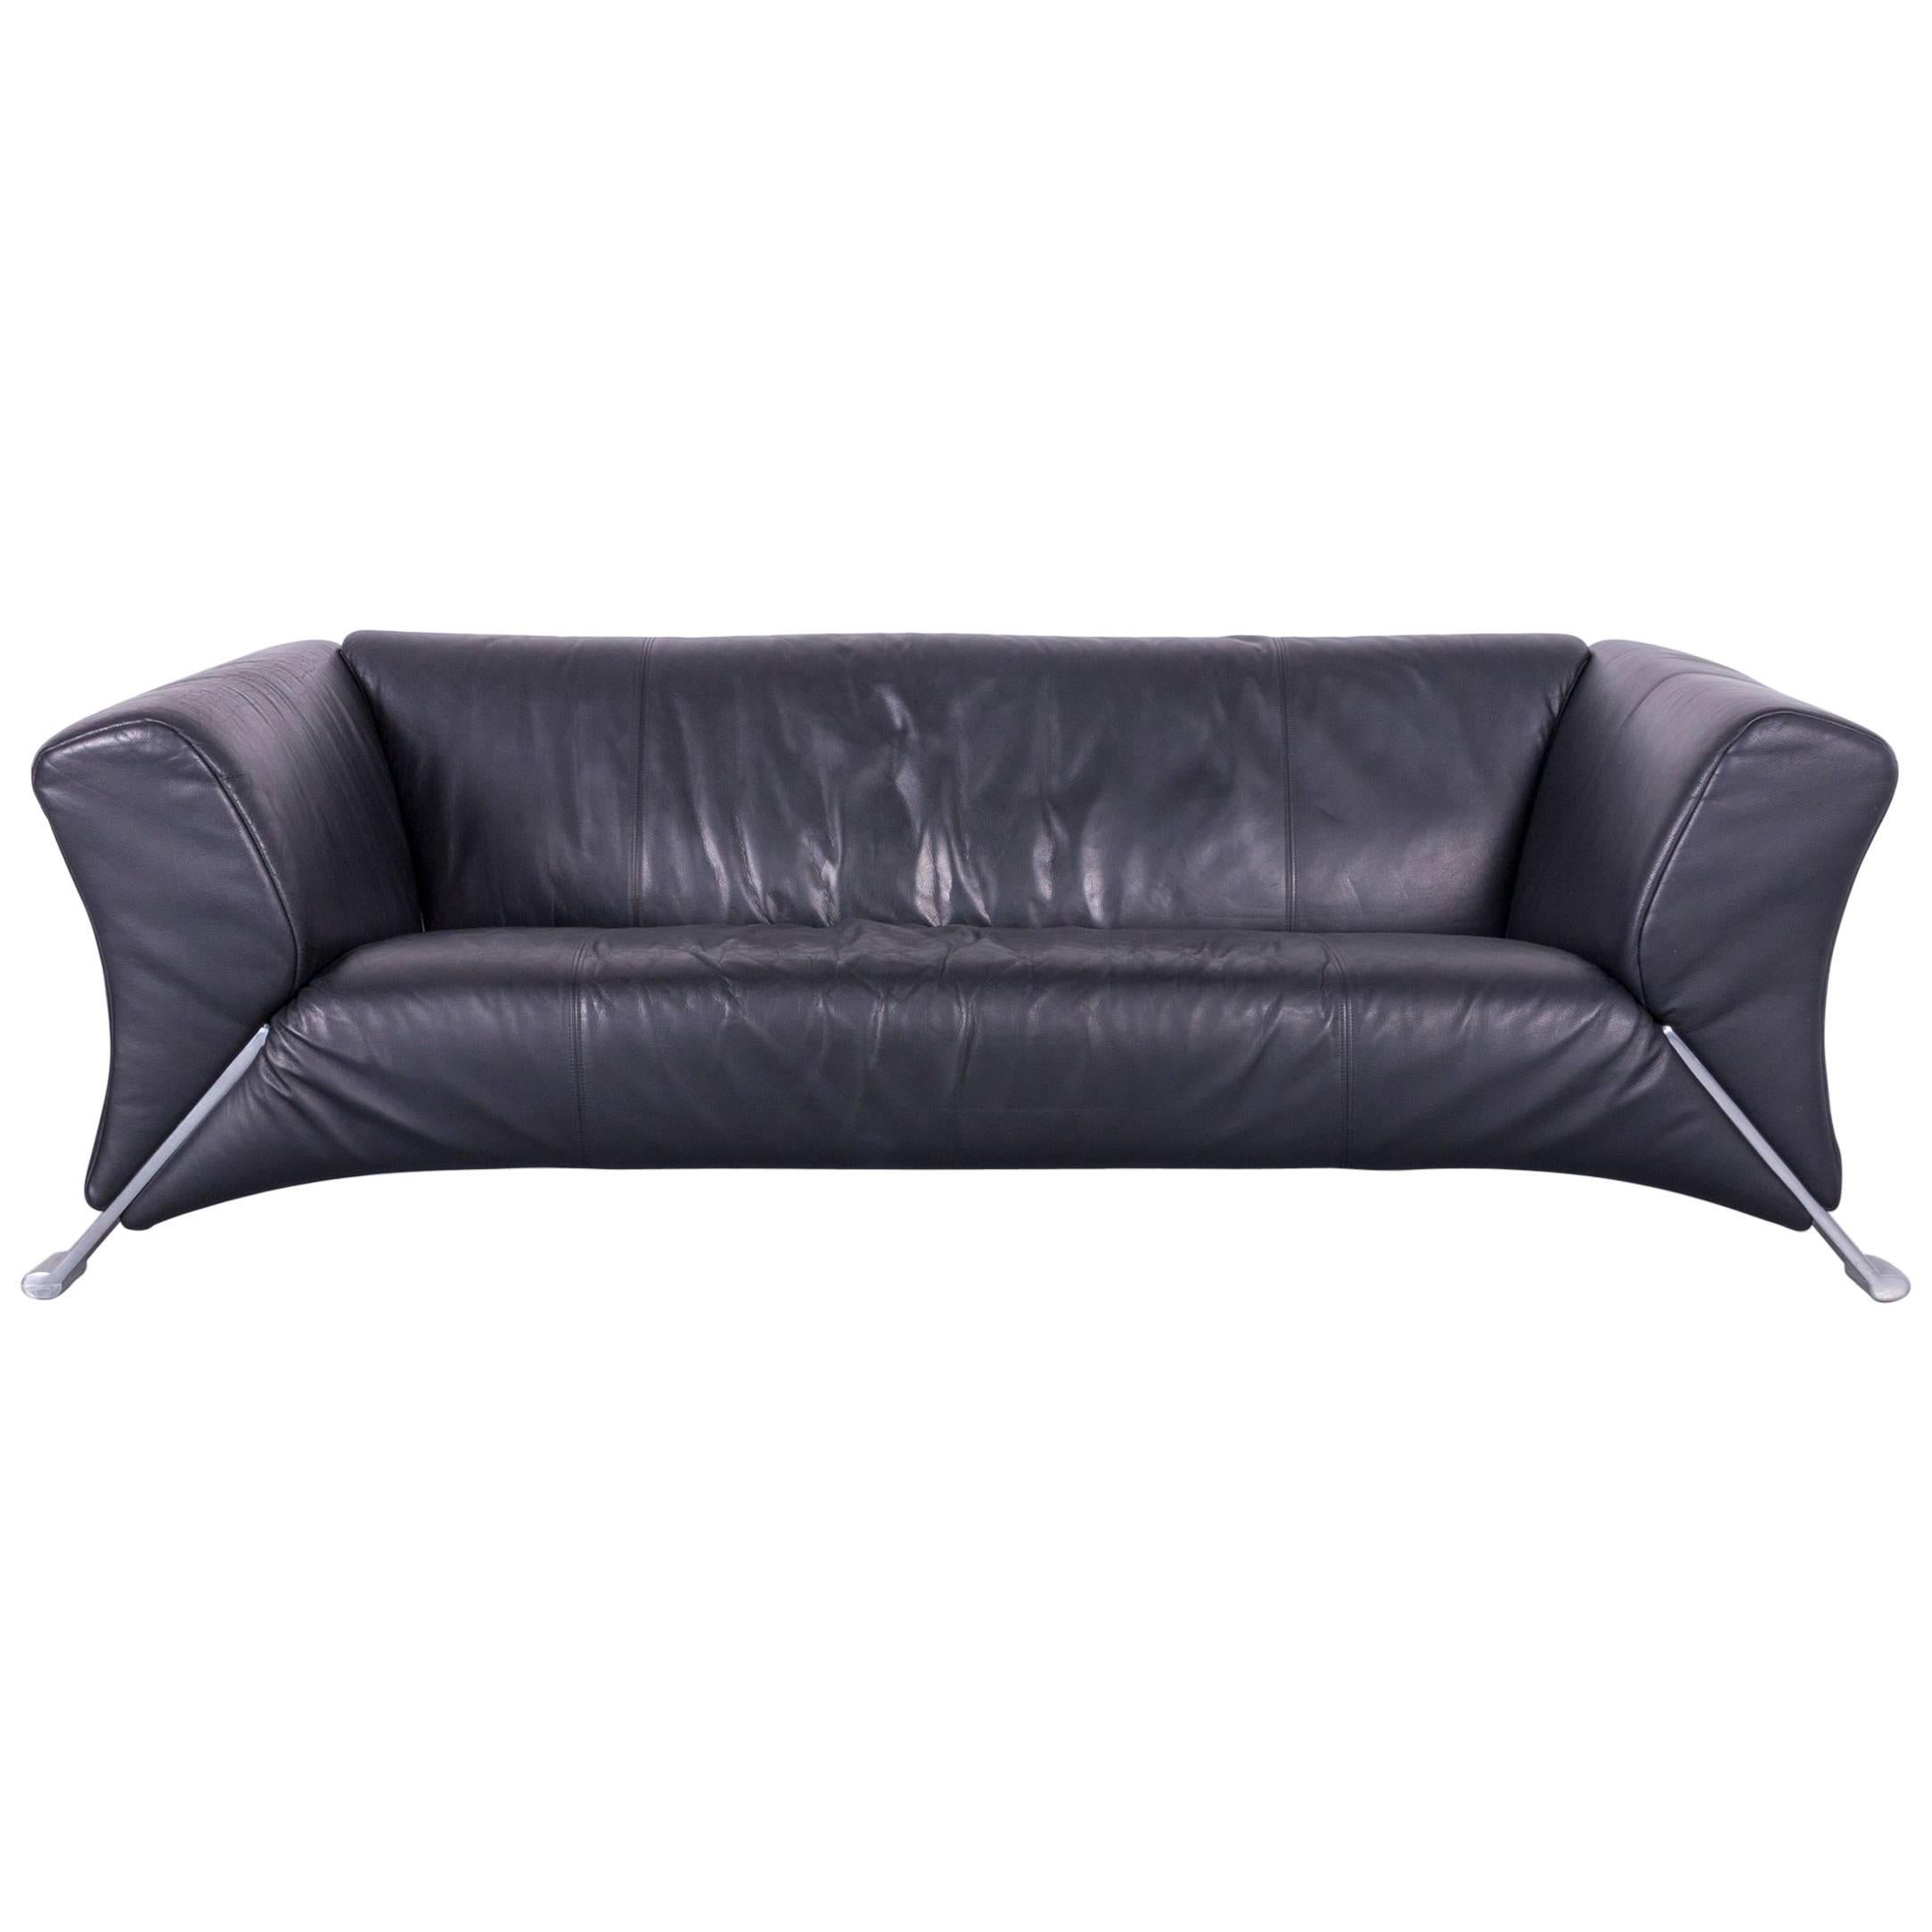 Rolf Benz 322 Designer Sofa Black Three-Seat Leather Modern Couch Metal Feet